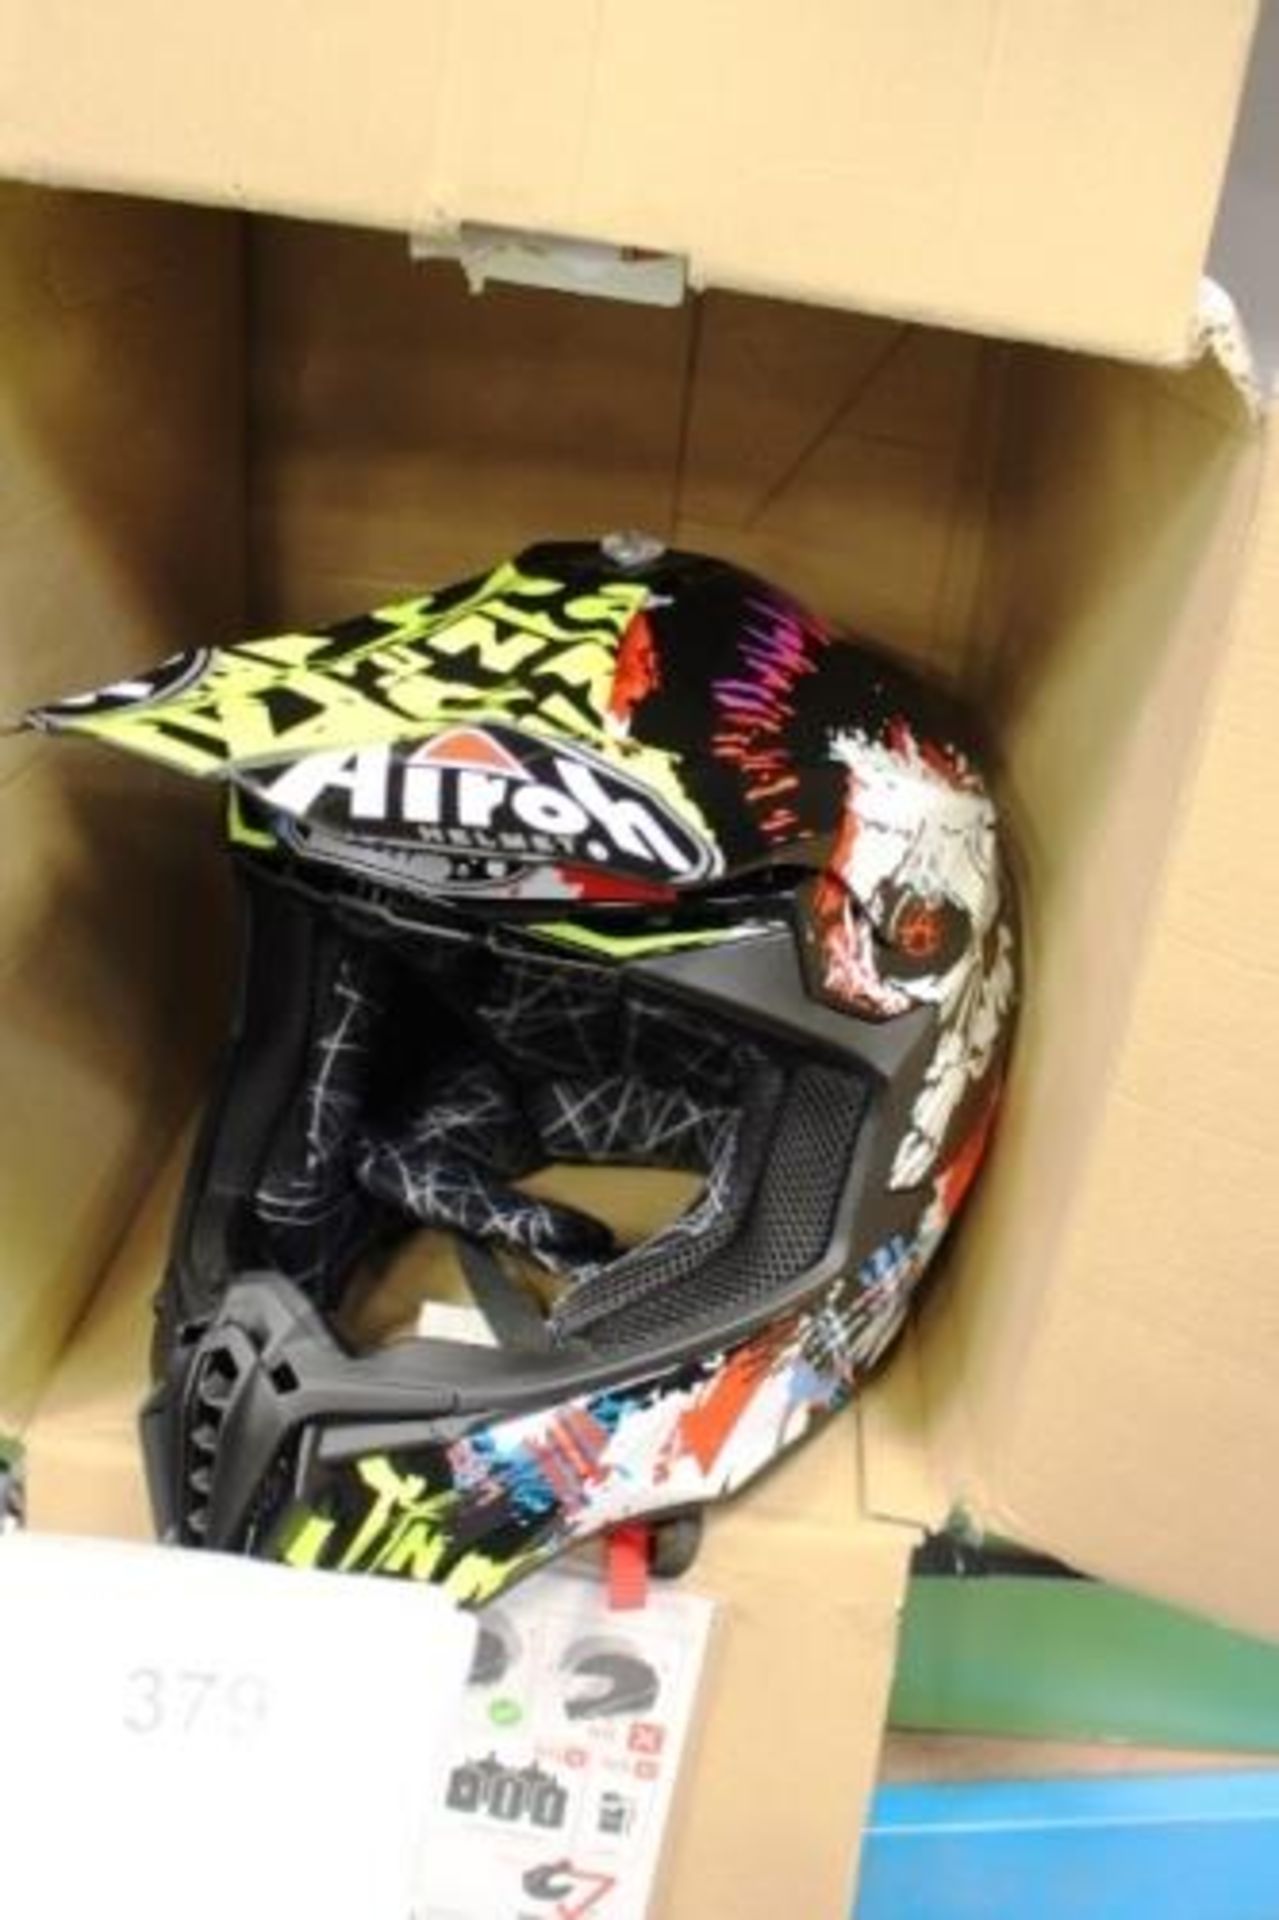 1 x Airoh twist crazy black gloss TWCR56 helmet, size L code AIOA13RWIHZC - New in box (GS4) - Image 3 of 4